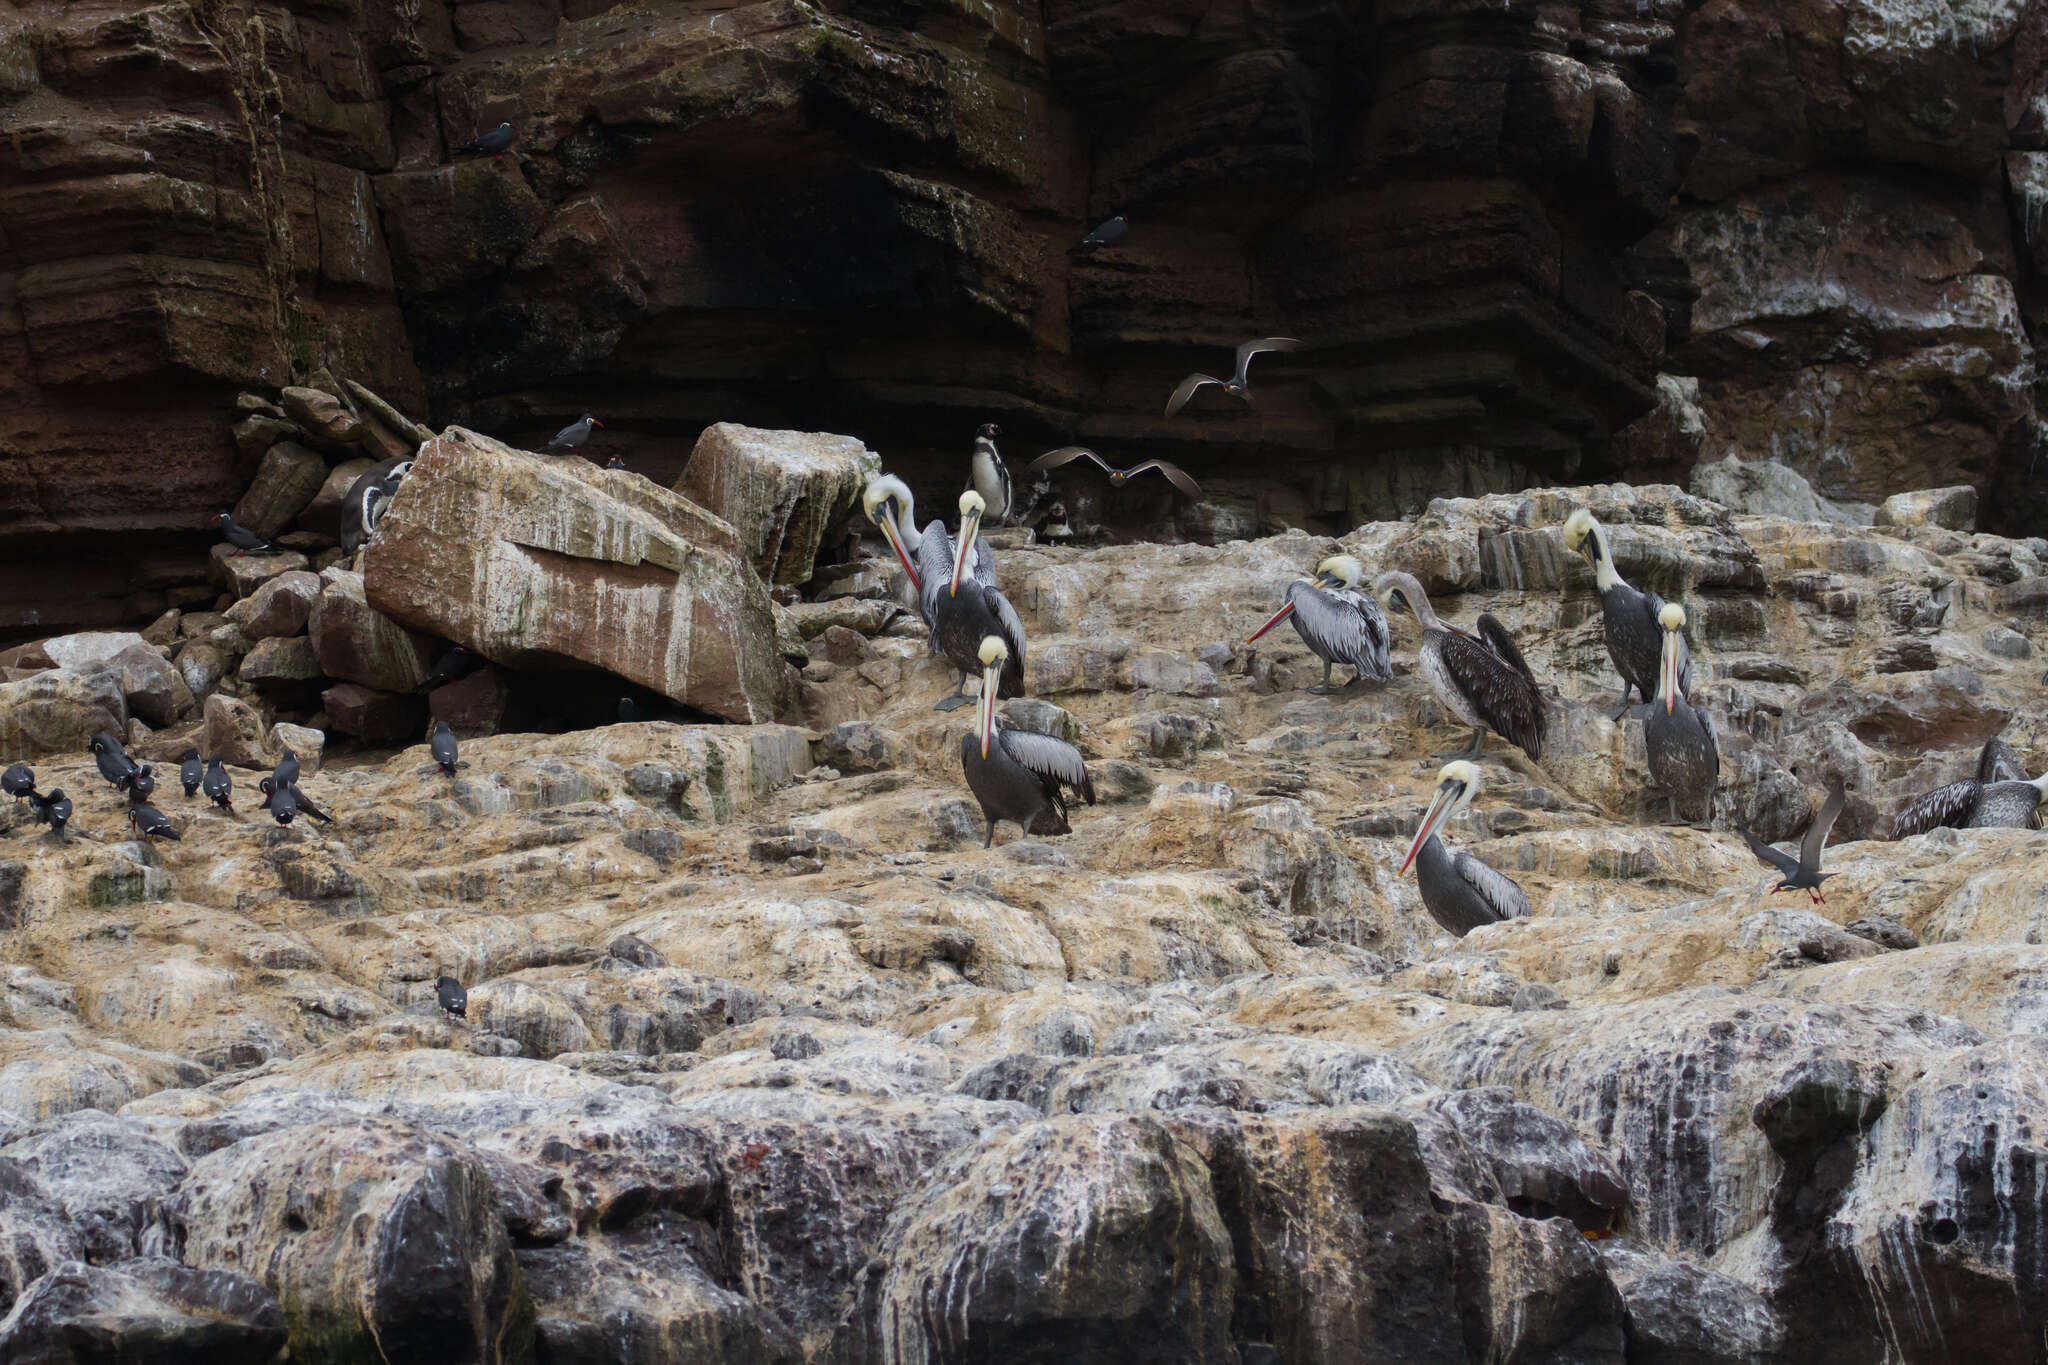 Image of Humboldt Penguin